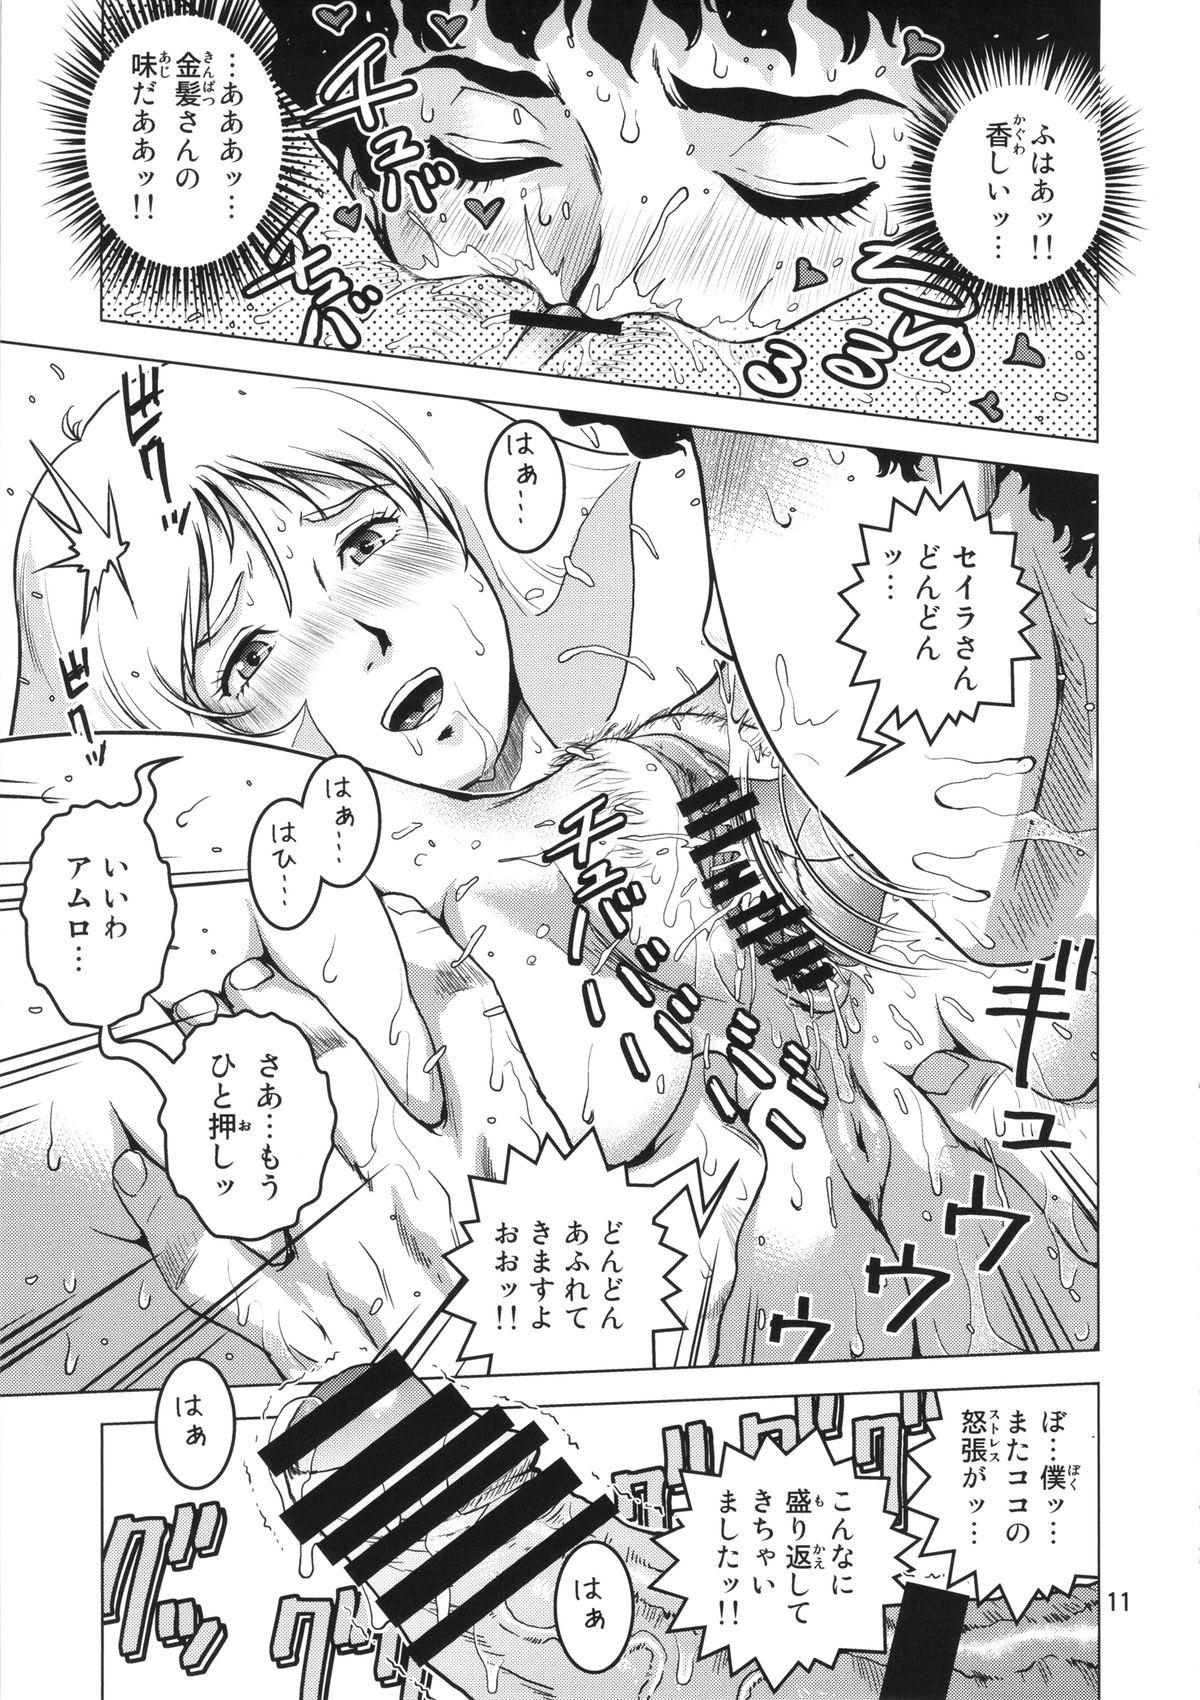 Tight Osase no Sayla-san - Mobile suit gundam Live - Page 10